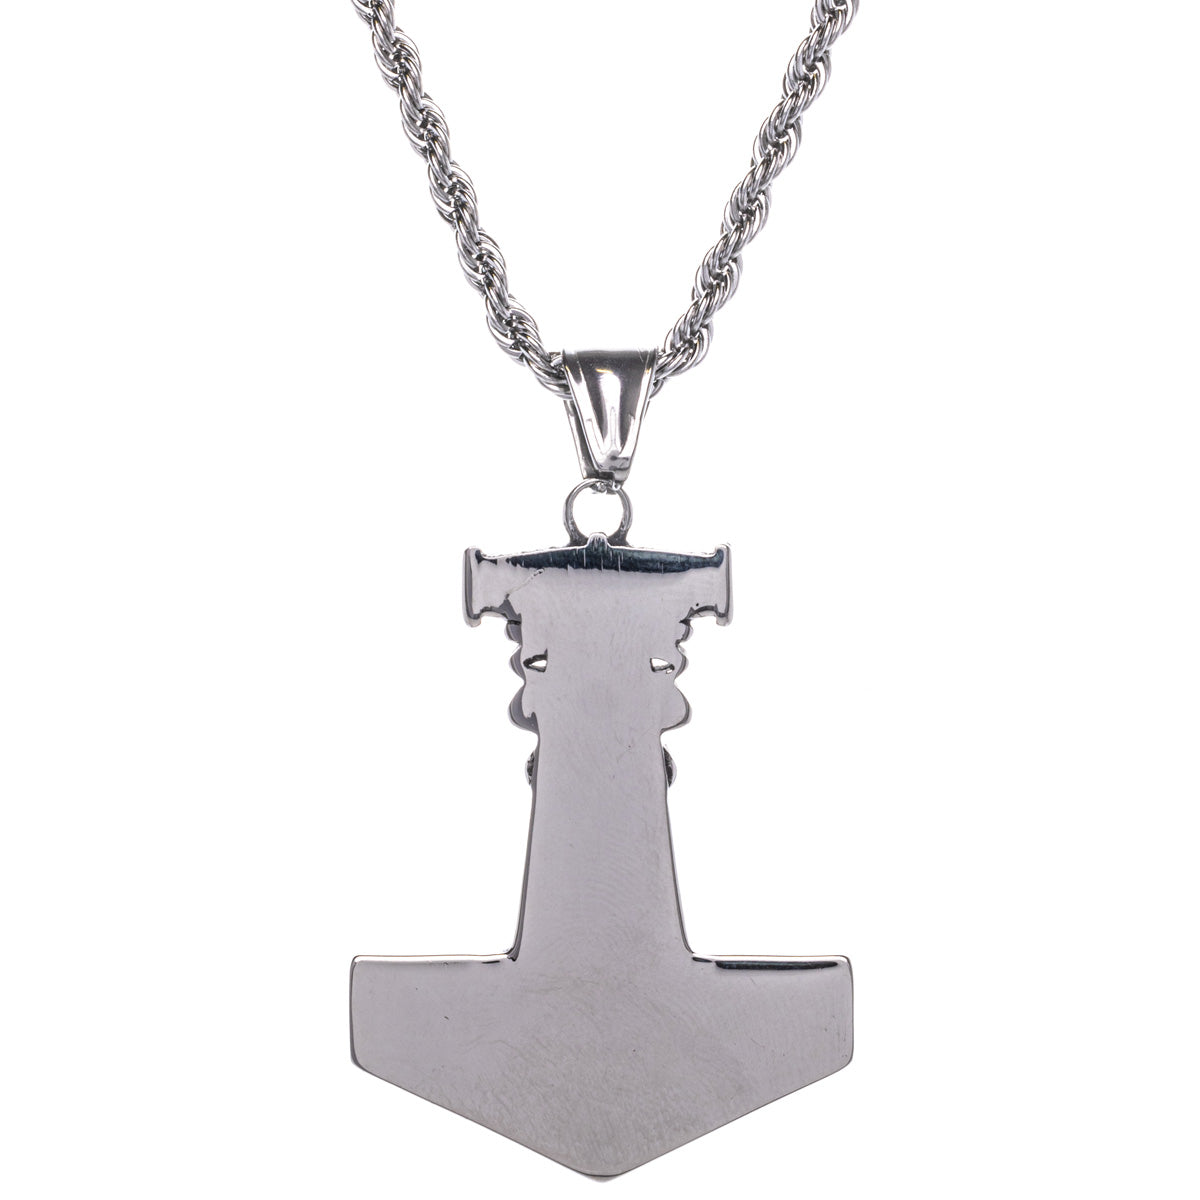 Chain decorated Mjölnir Thor's hammer pendant necklace (Steel 316L)